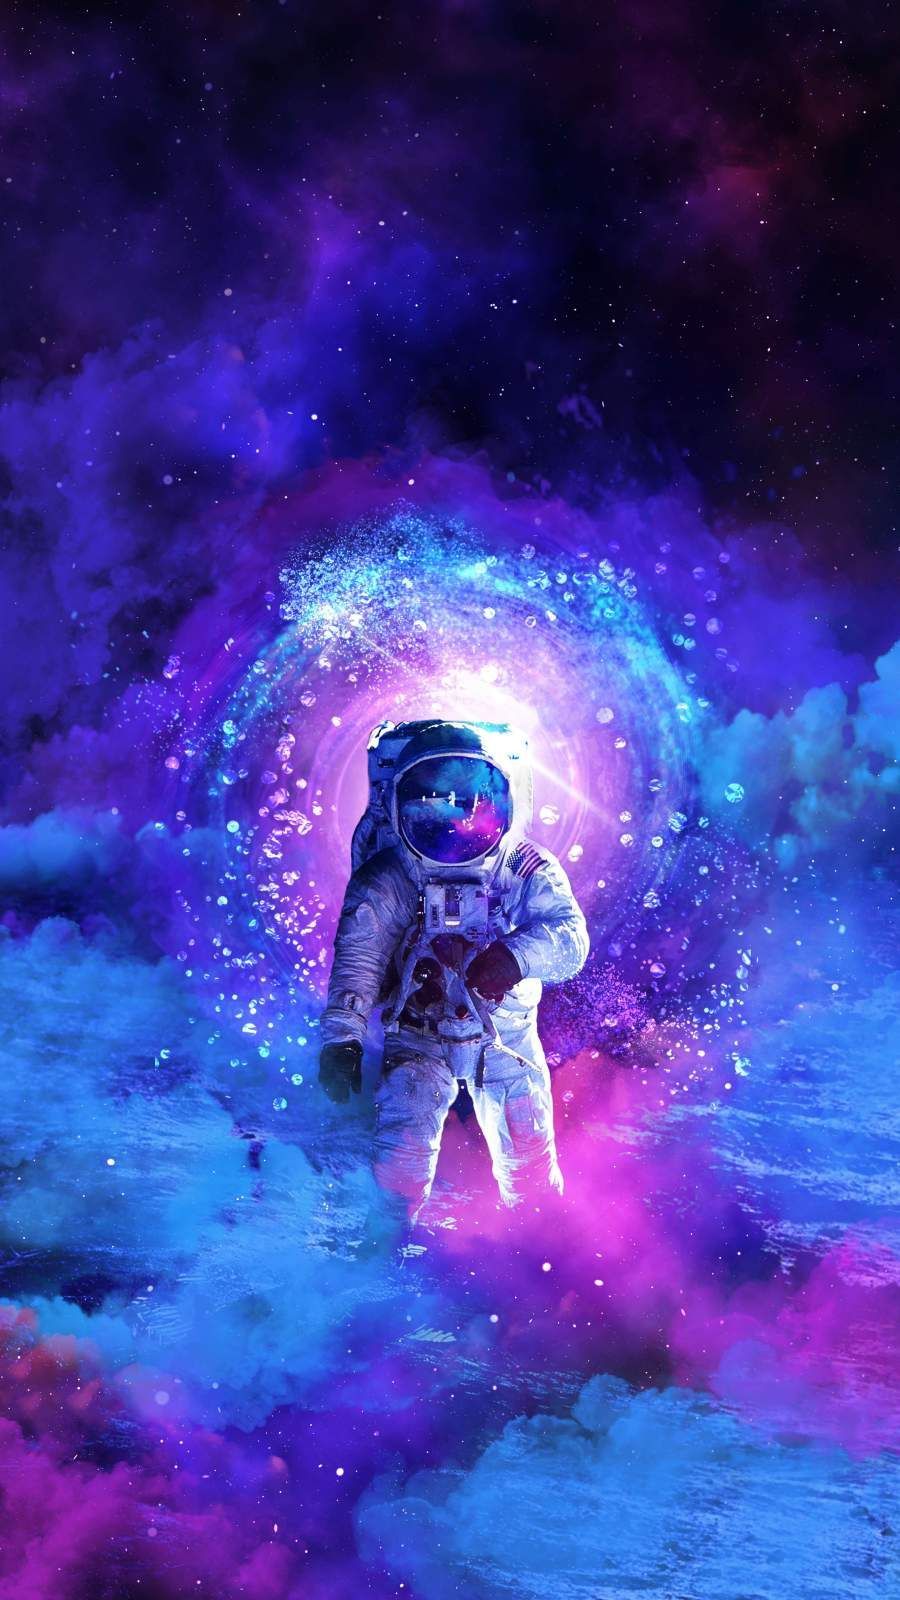 The Cosmonaut iPhone Wallpaper. Galaxy art, Space artwork, Astronaut wallpaper